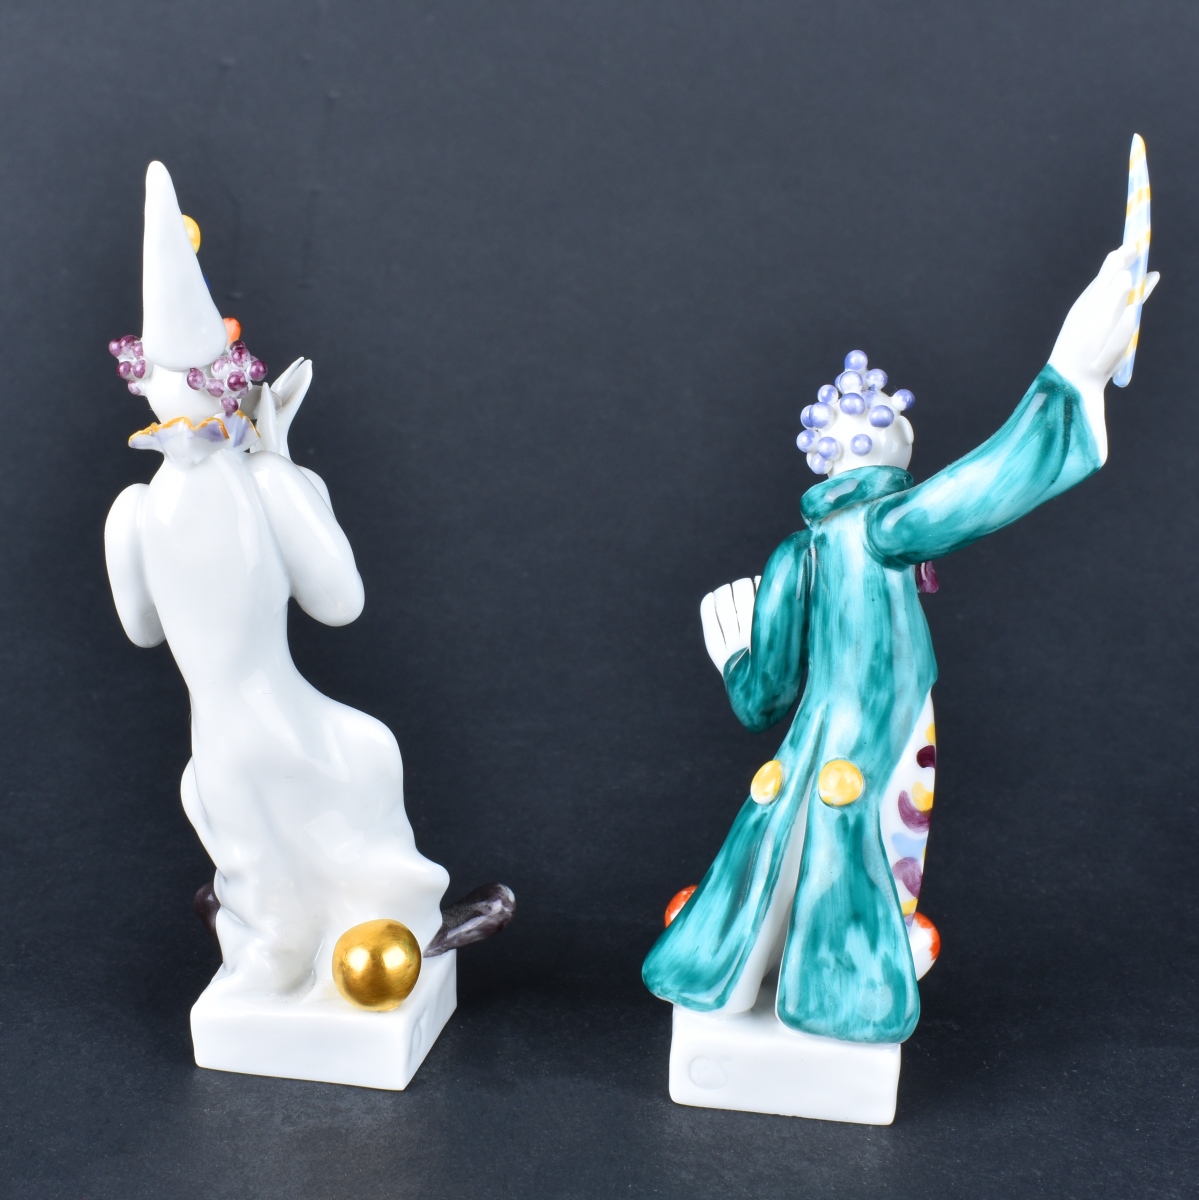 Two Meissen Figurines